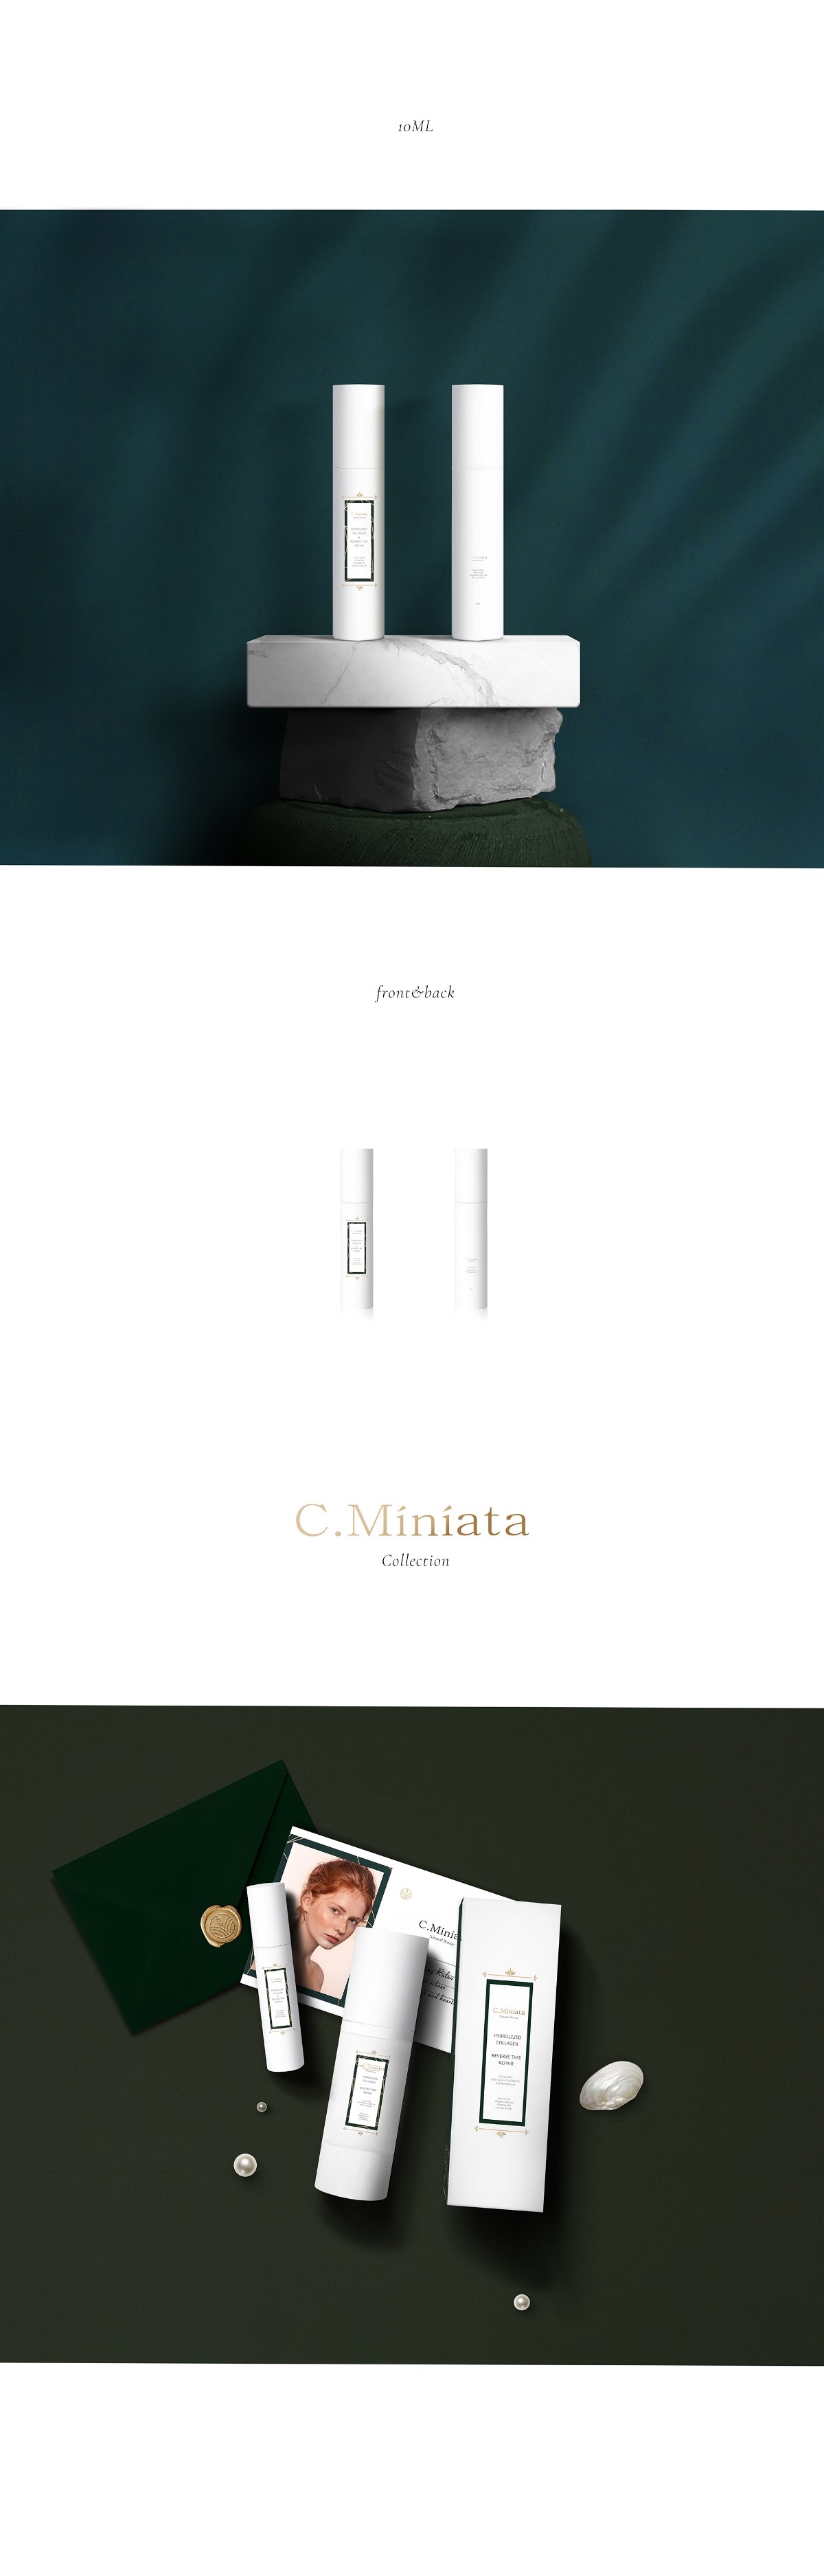 C.miniata法式护肤品牌系列产品包装设计及升级